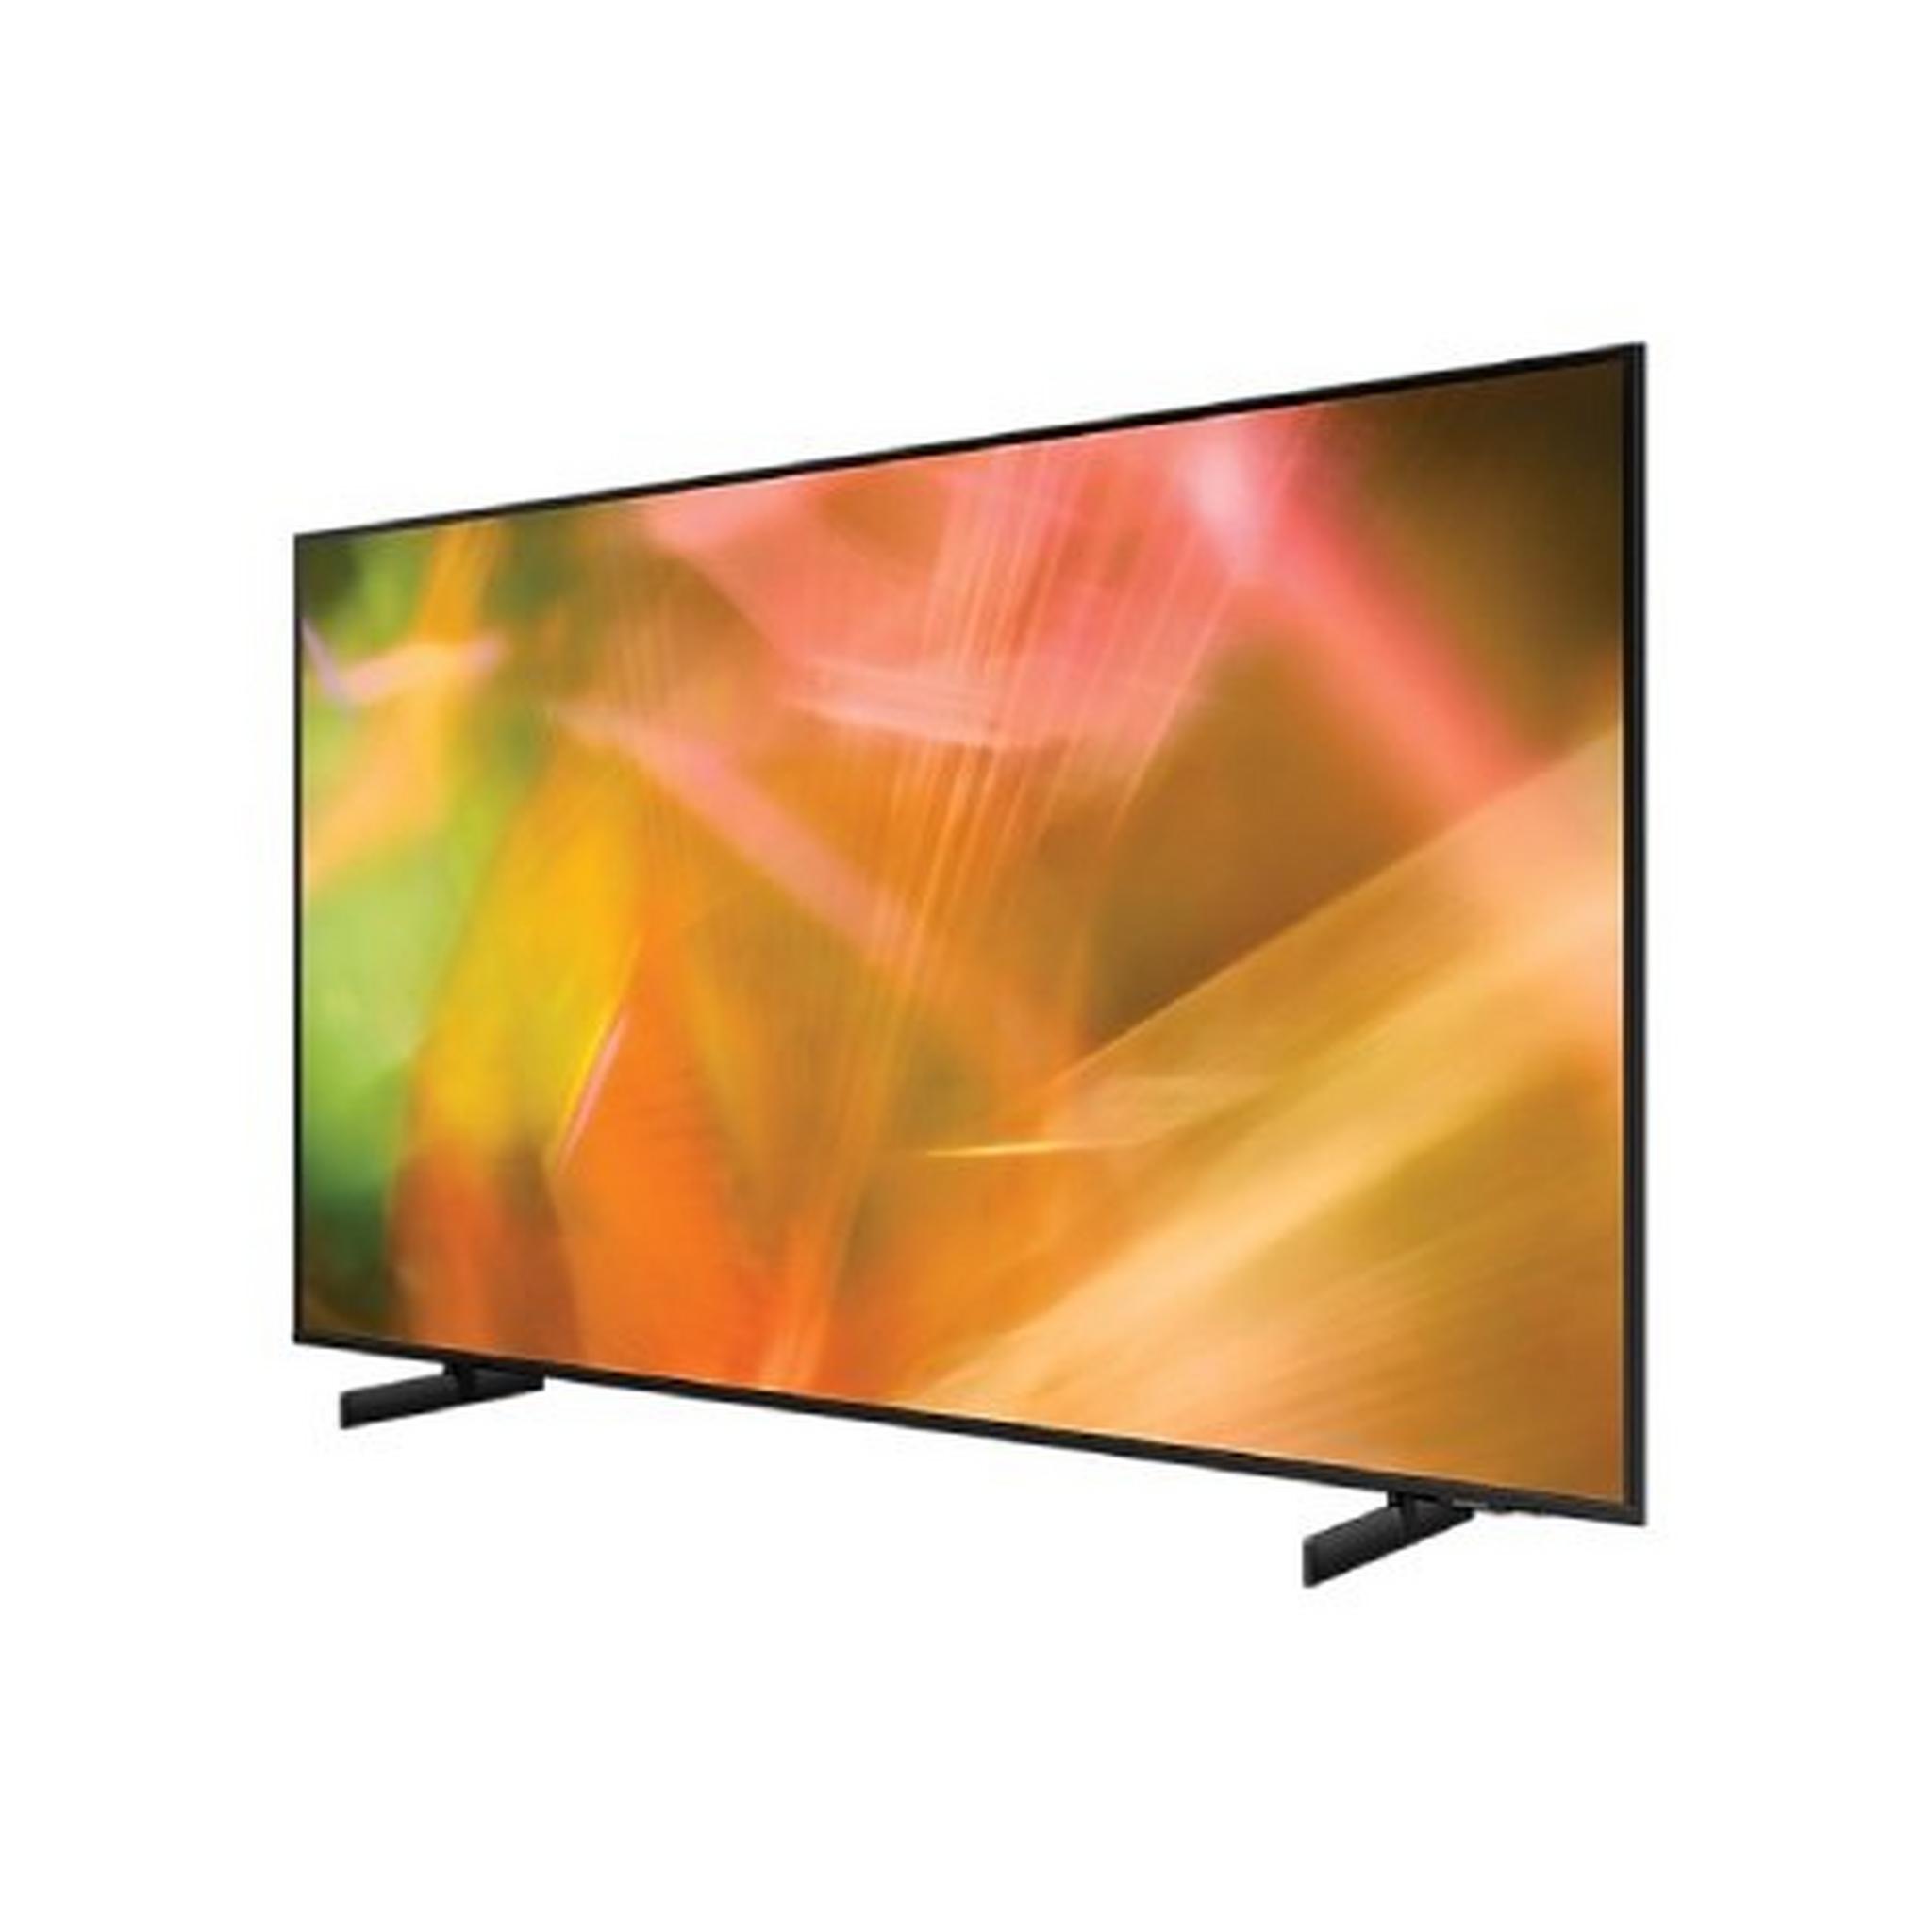 Samsung Series AU8000 55-inch Smart UHD LED TV (UA55AU8000)